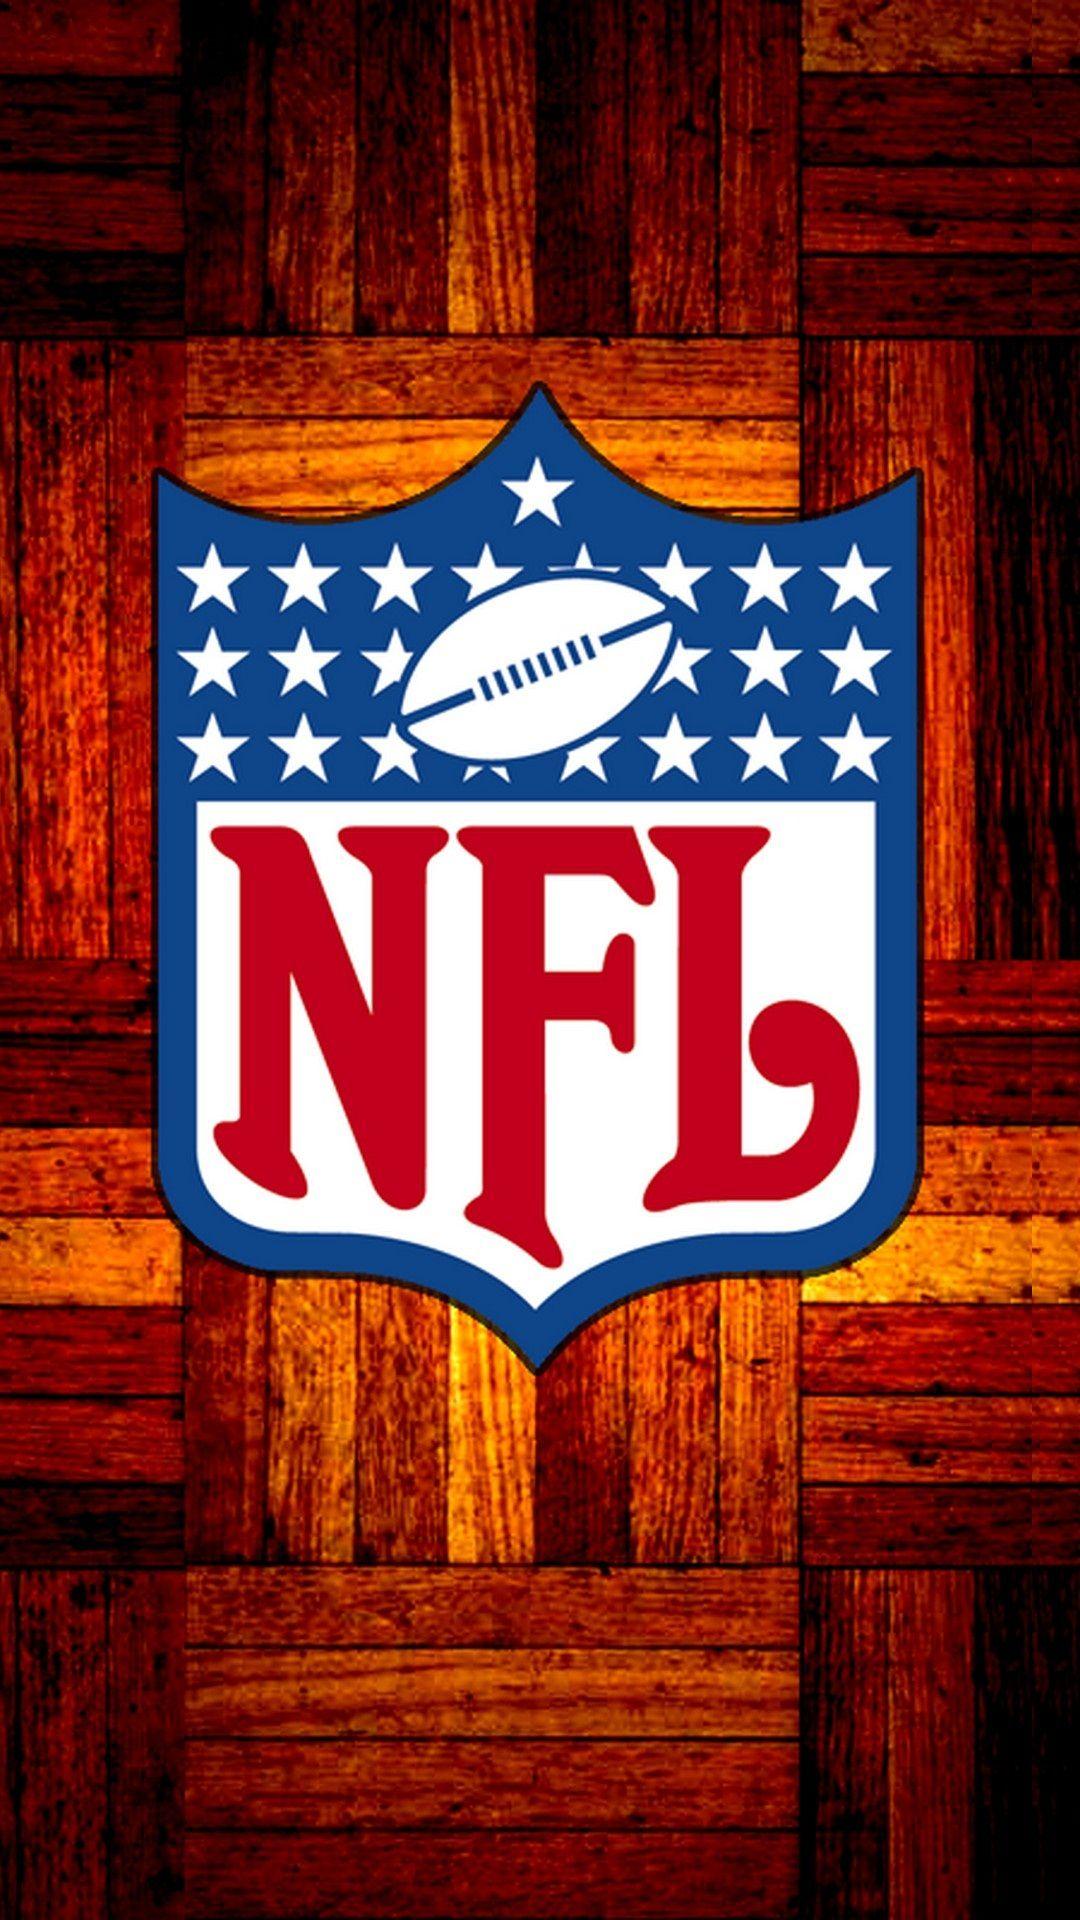 NFL HD Wallpaper For iPhone. Wallpaper. Football